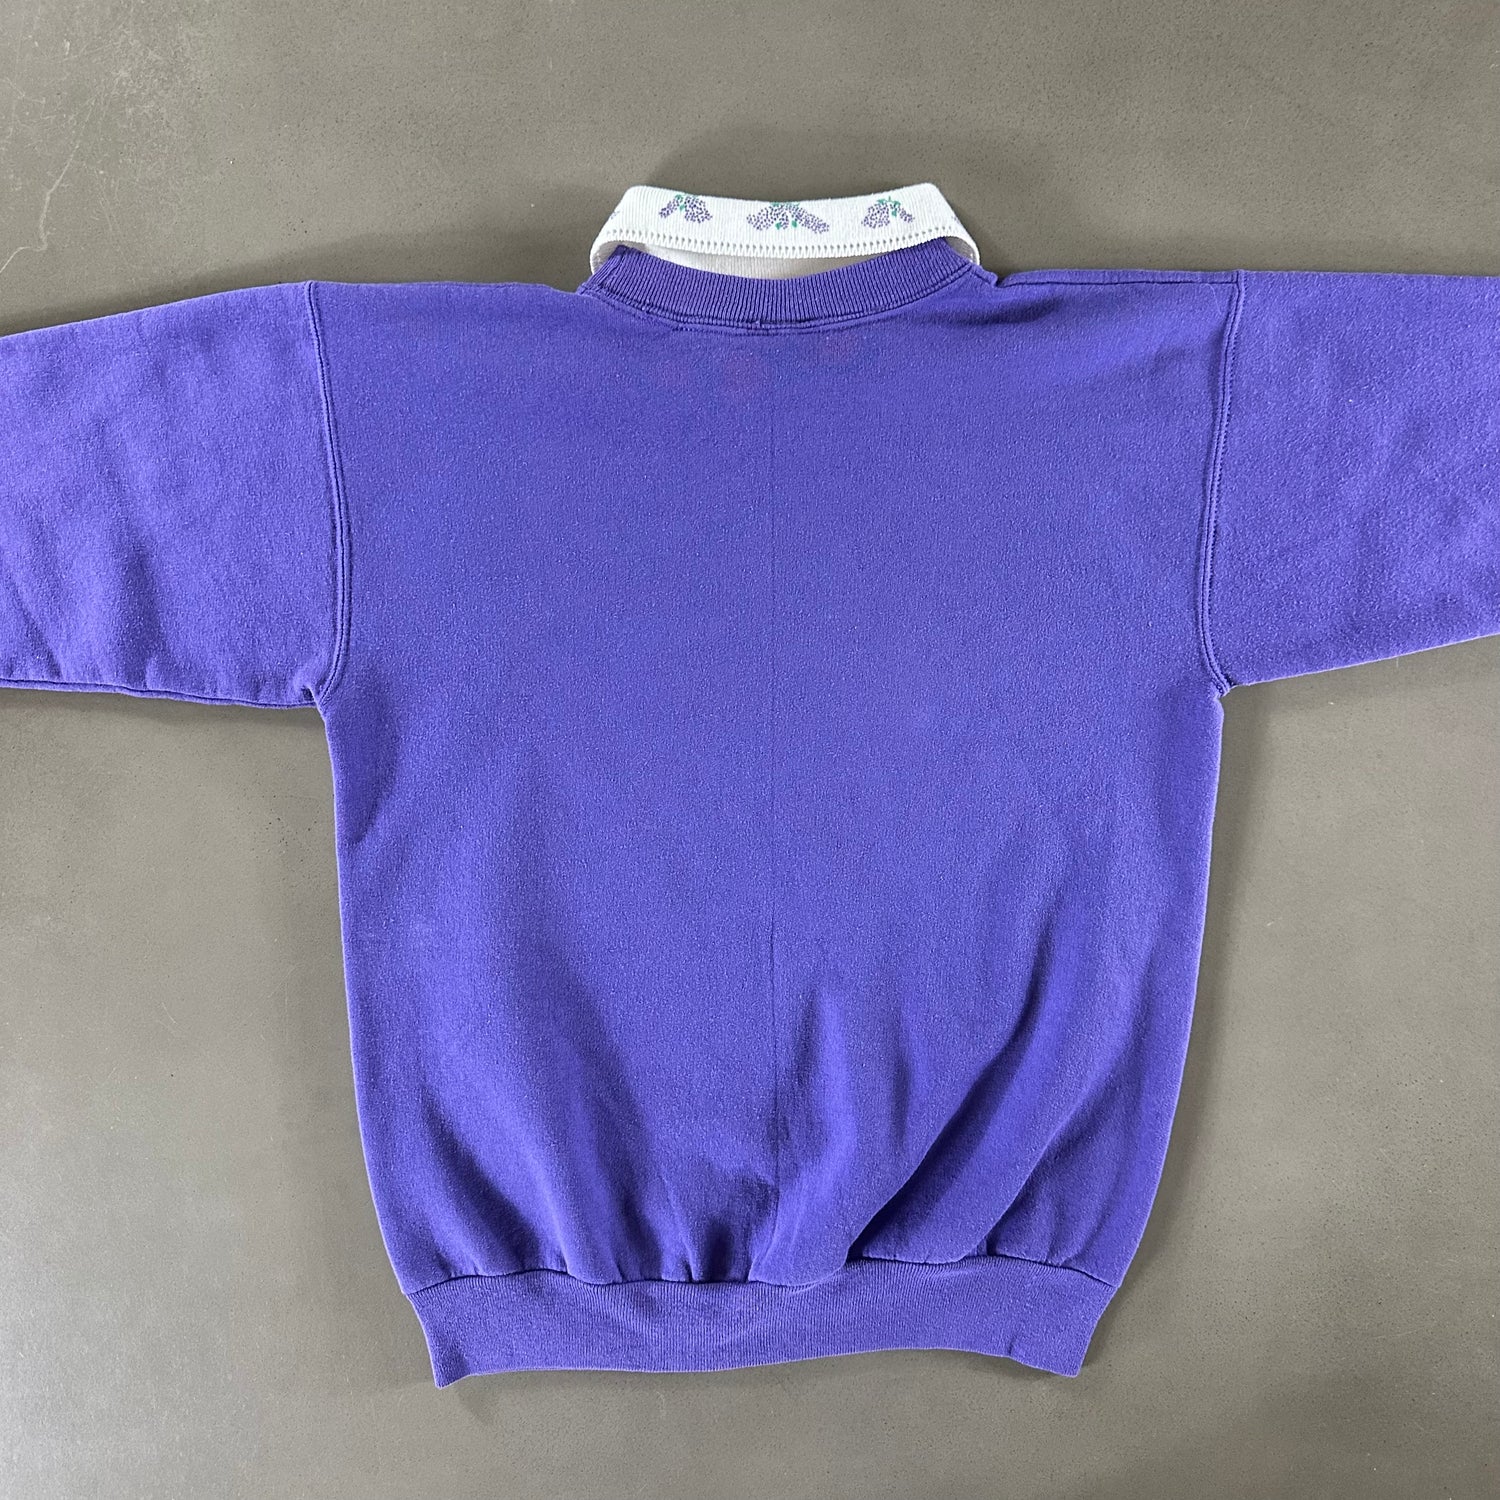 Vintage 1990s Lilac Sweatshirt size Small